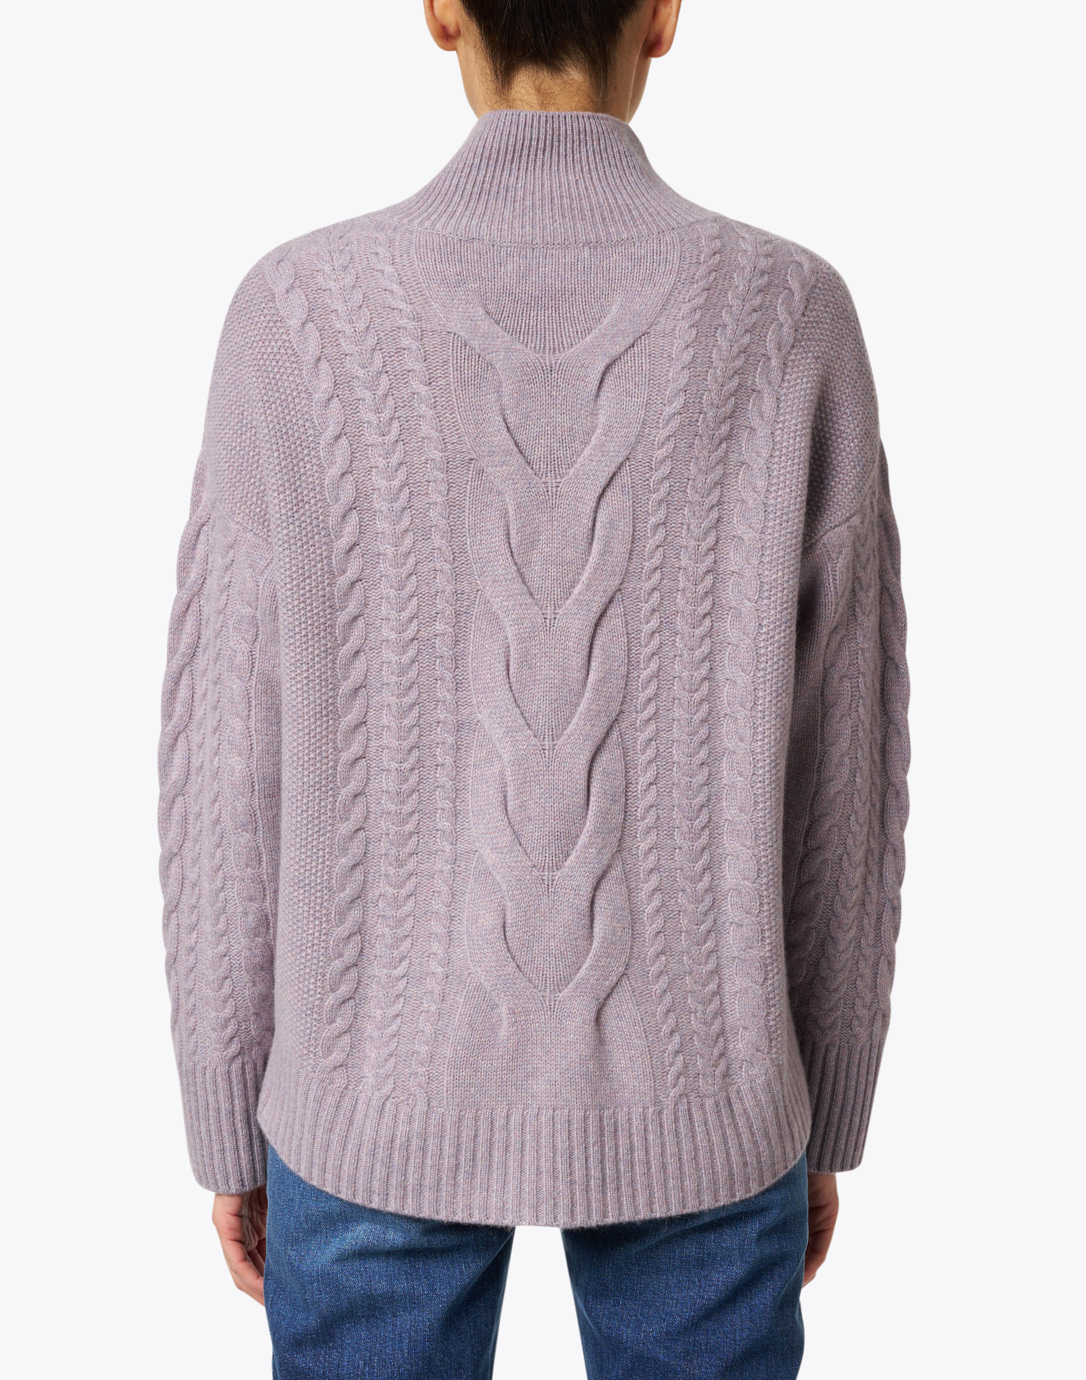 Opal Lavender Cashmere Cable Knit Sweater | Repeat Cashmere | Halsbrook